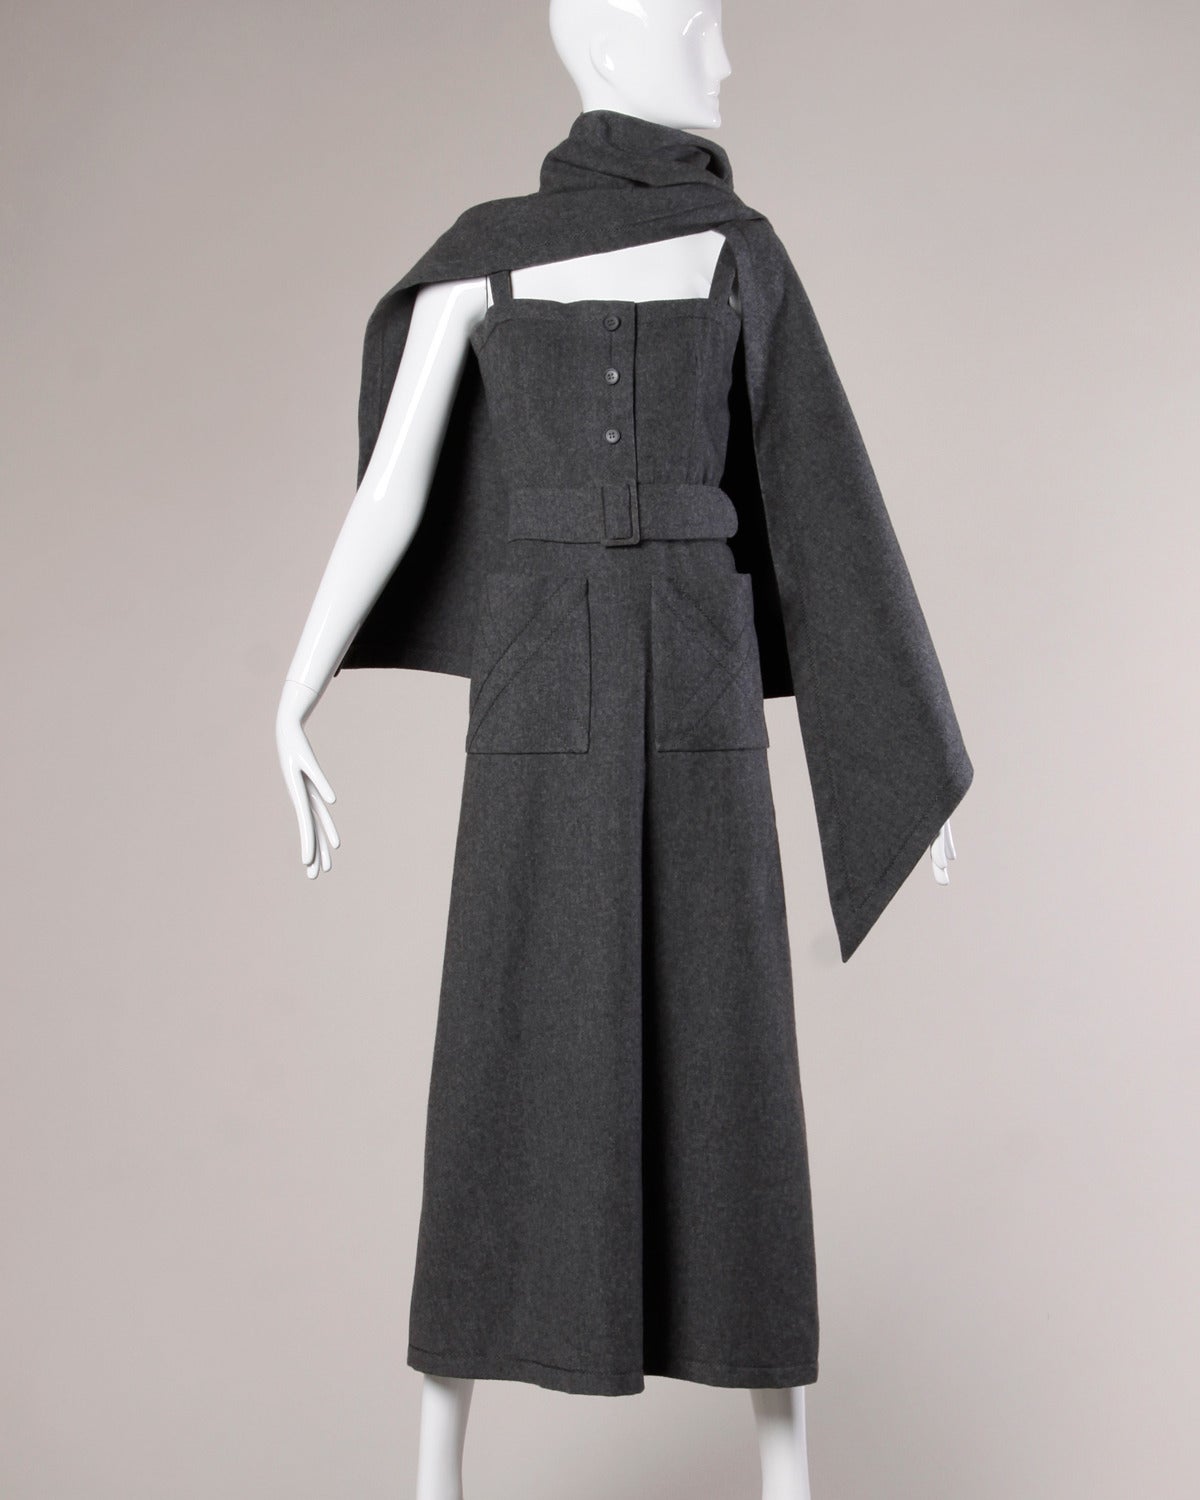 Jean Patou Vintage 1960s Wool 3-Piece Belt, Wrap & Dress Ensemble For Sale 4